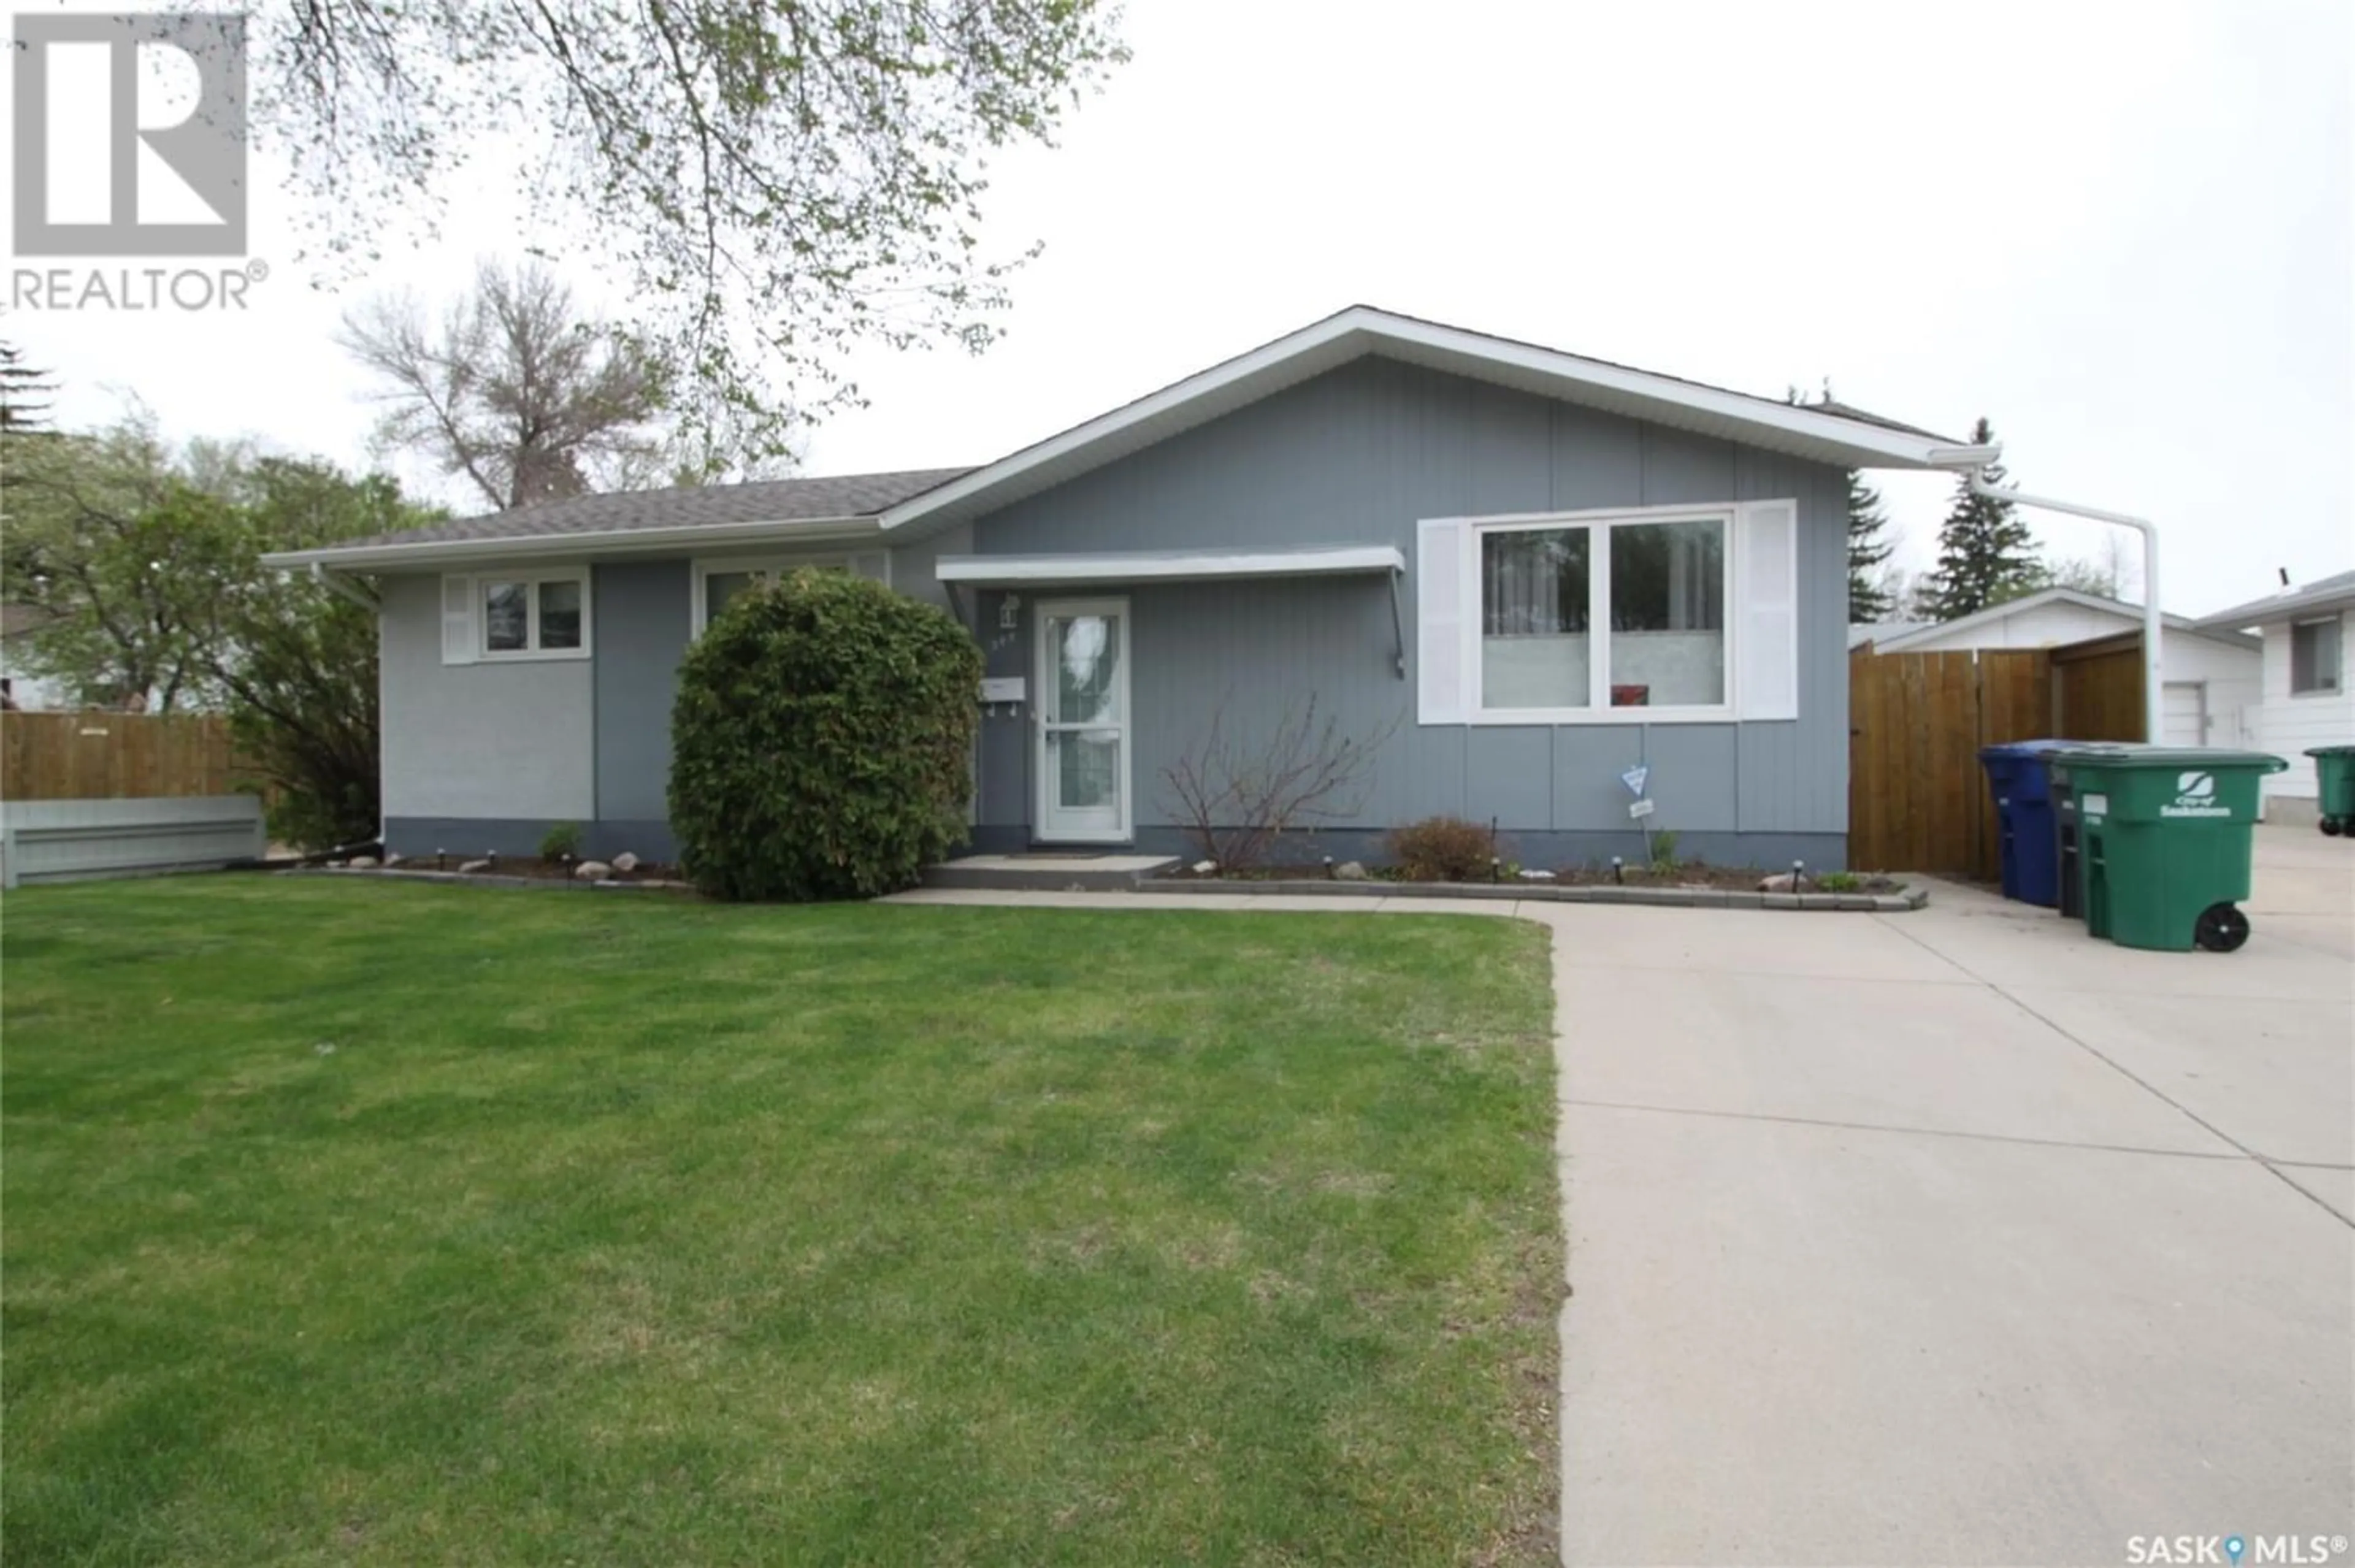 Home with vinyl exterior material for 344 Simon Fraser CRESCENT, Saskatoon Saskatchewan S7H3T4